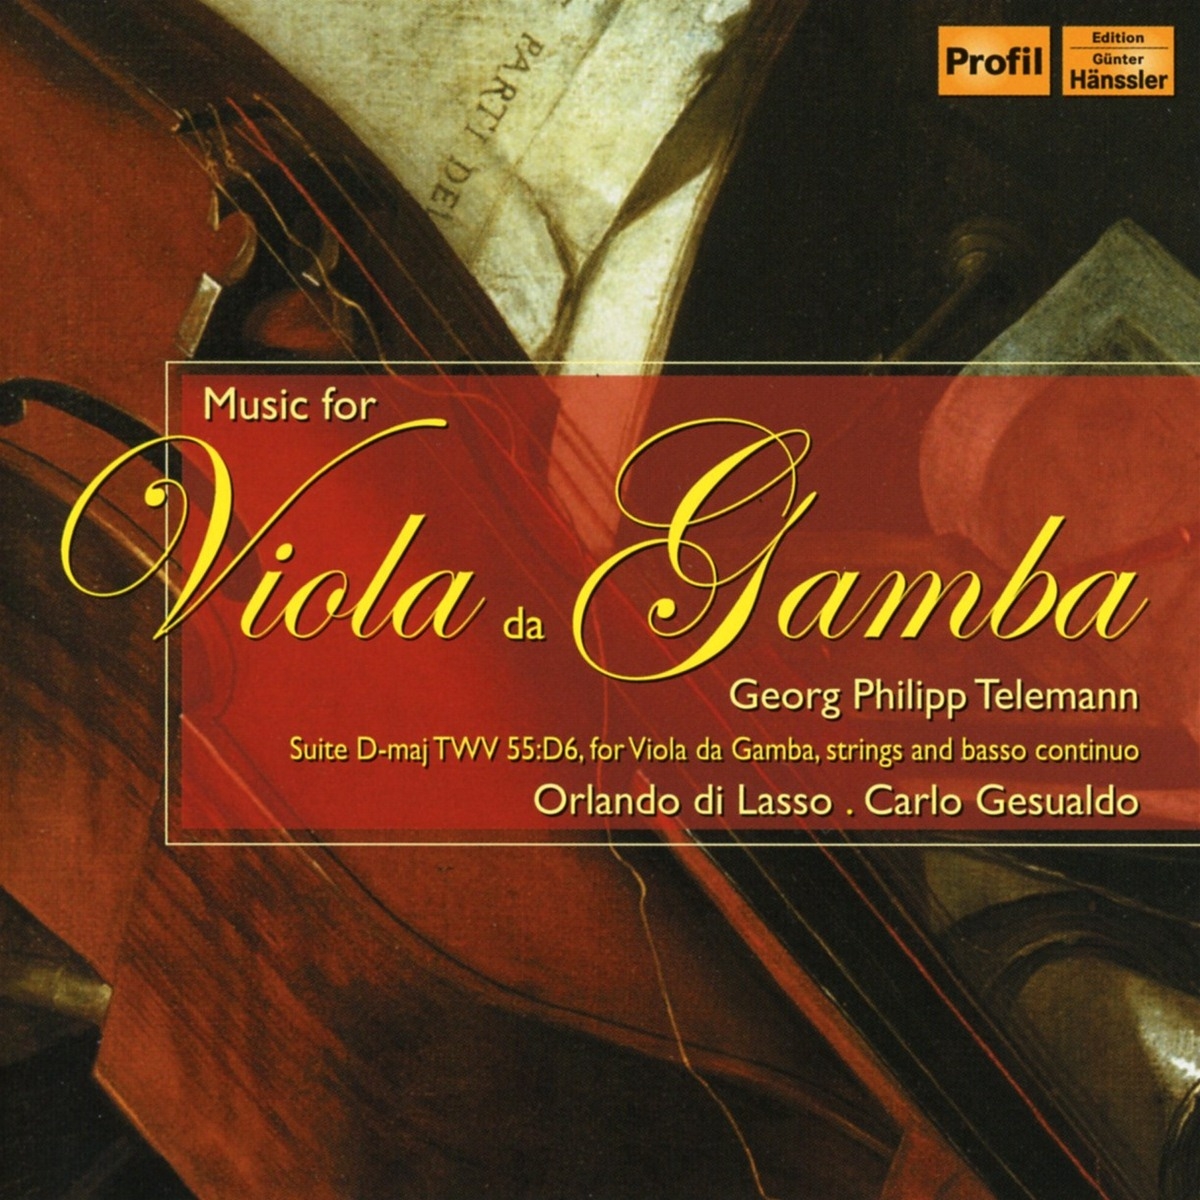 Music for Viola and Gamba